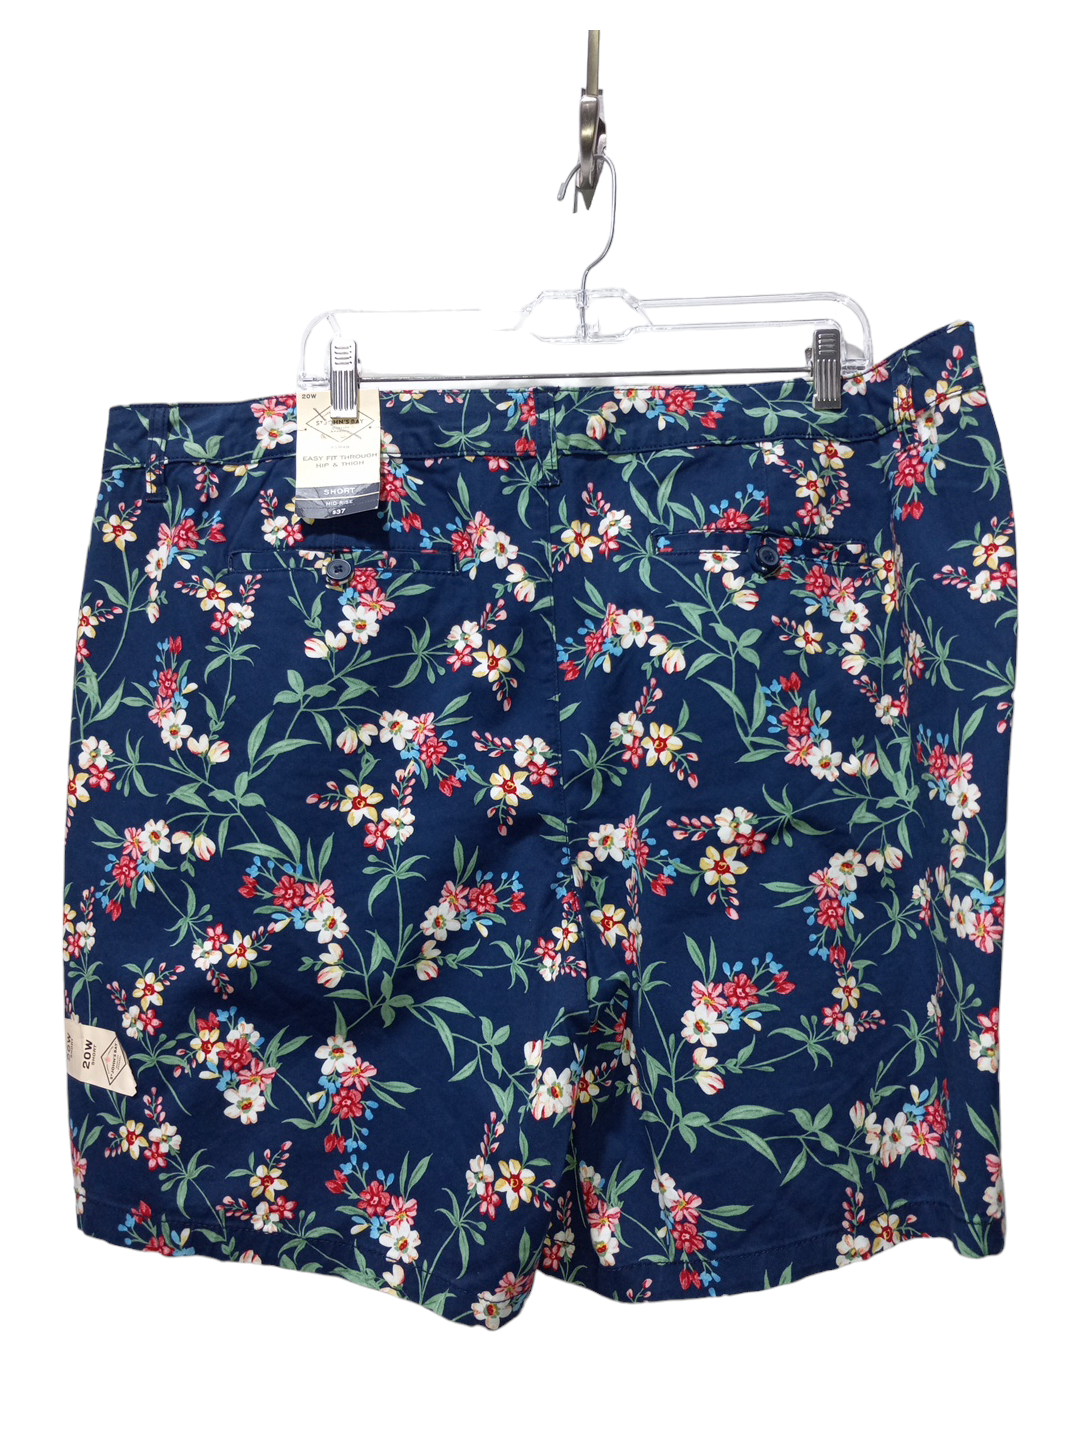 Shorts By St Johns Bay  Size: 2x